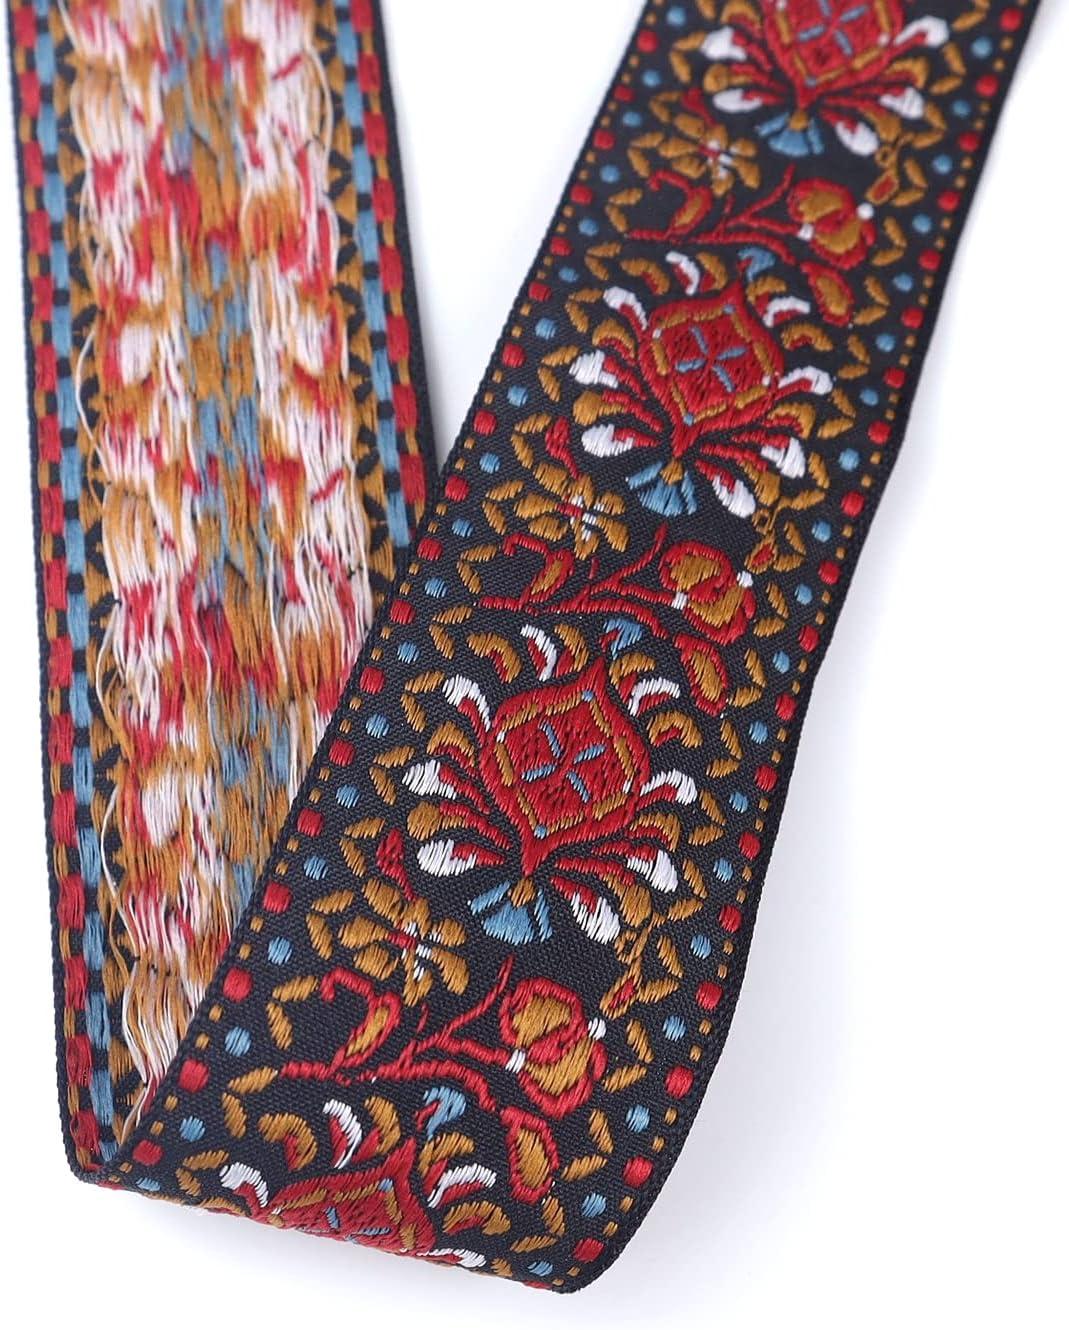 Jacquard Ribbon Trim Sewing Embroidered Ribbon Jacquard Trim for Sewing  Clothing Home Decor Wedding Bag